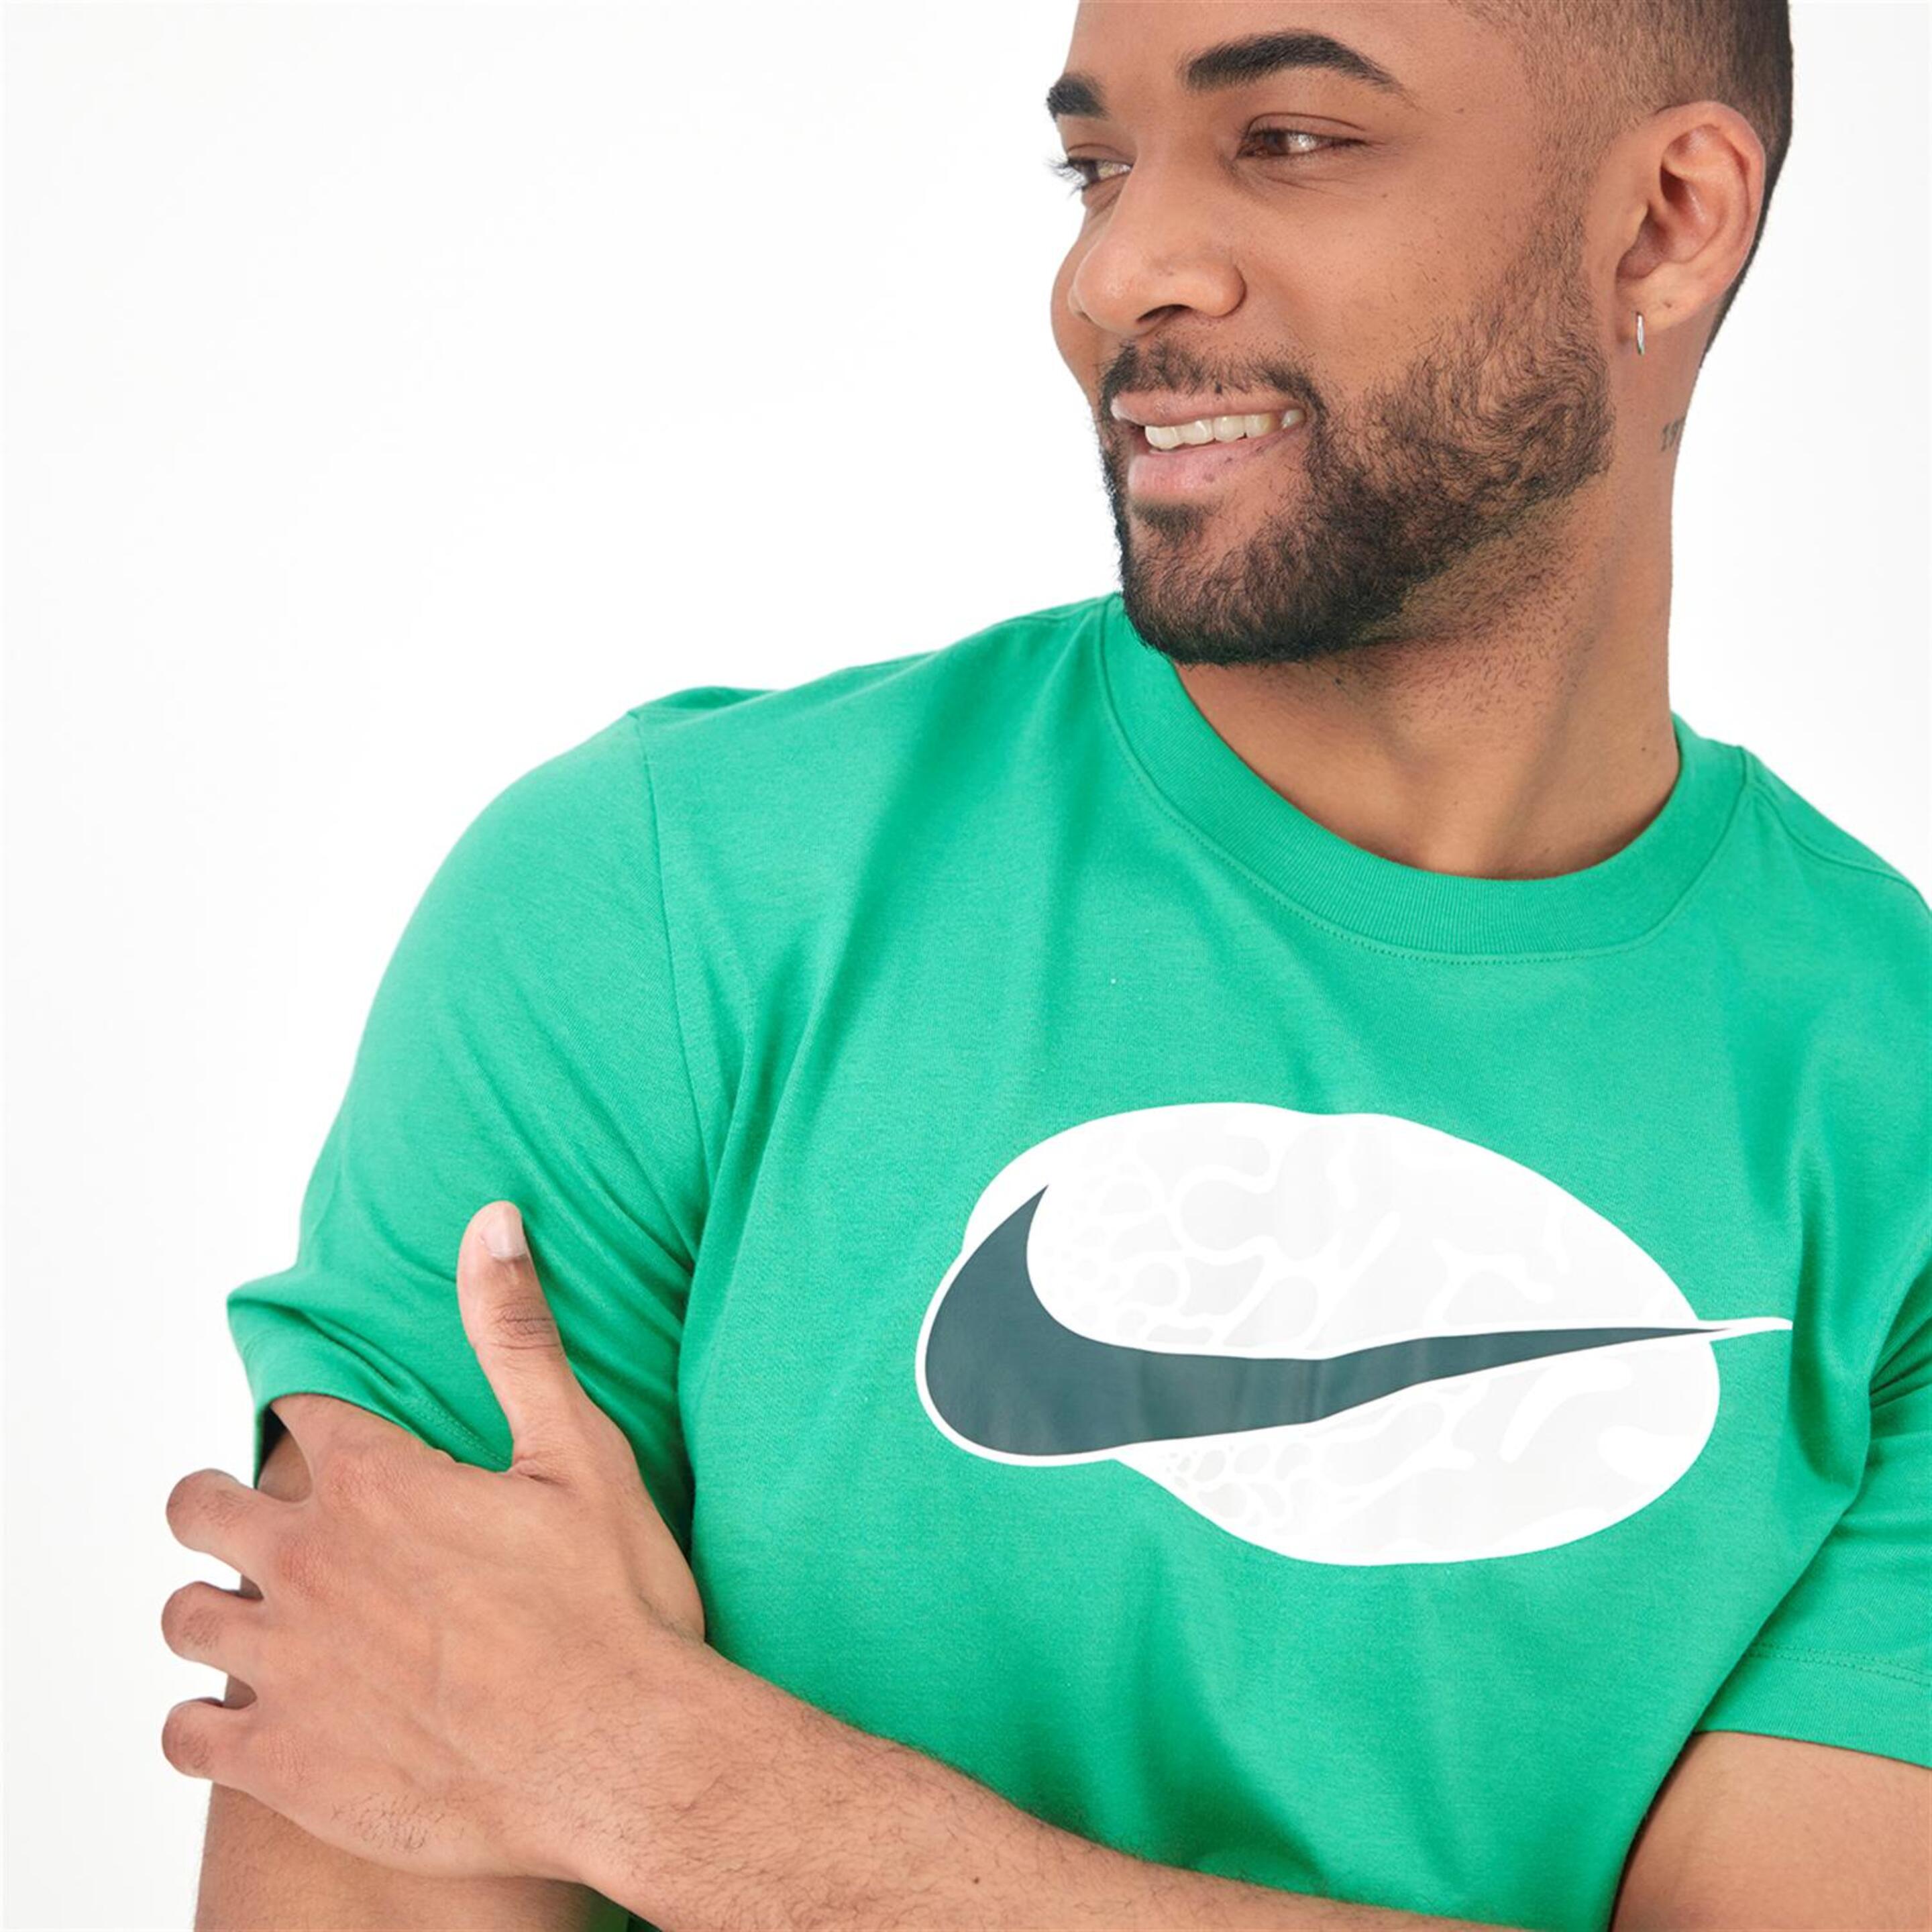 Camiseta Nike - Verde - Camiseta Hombre